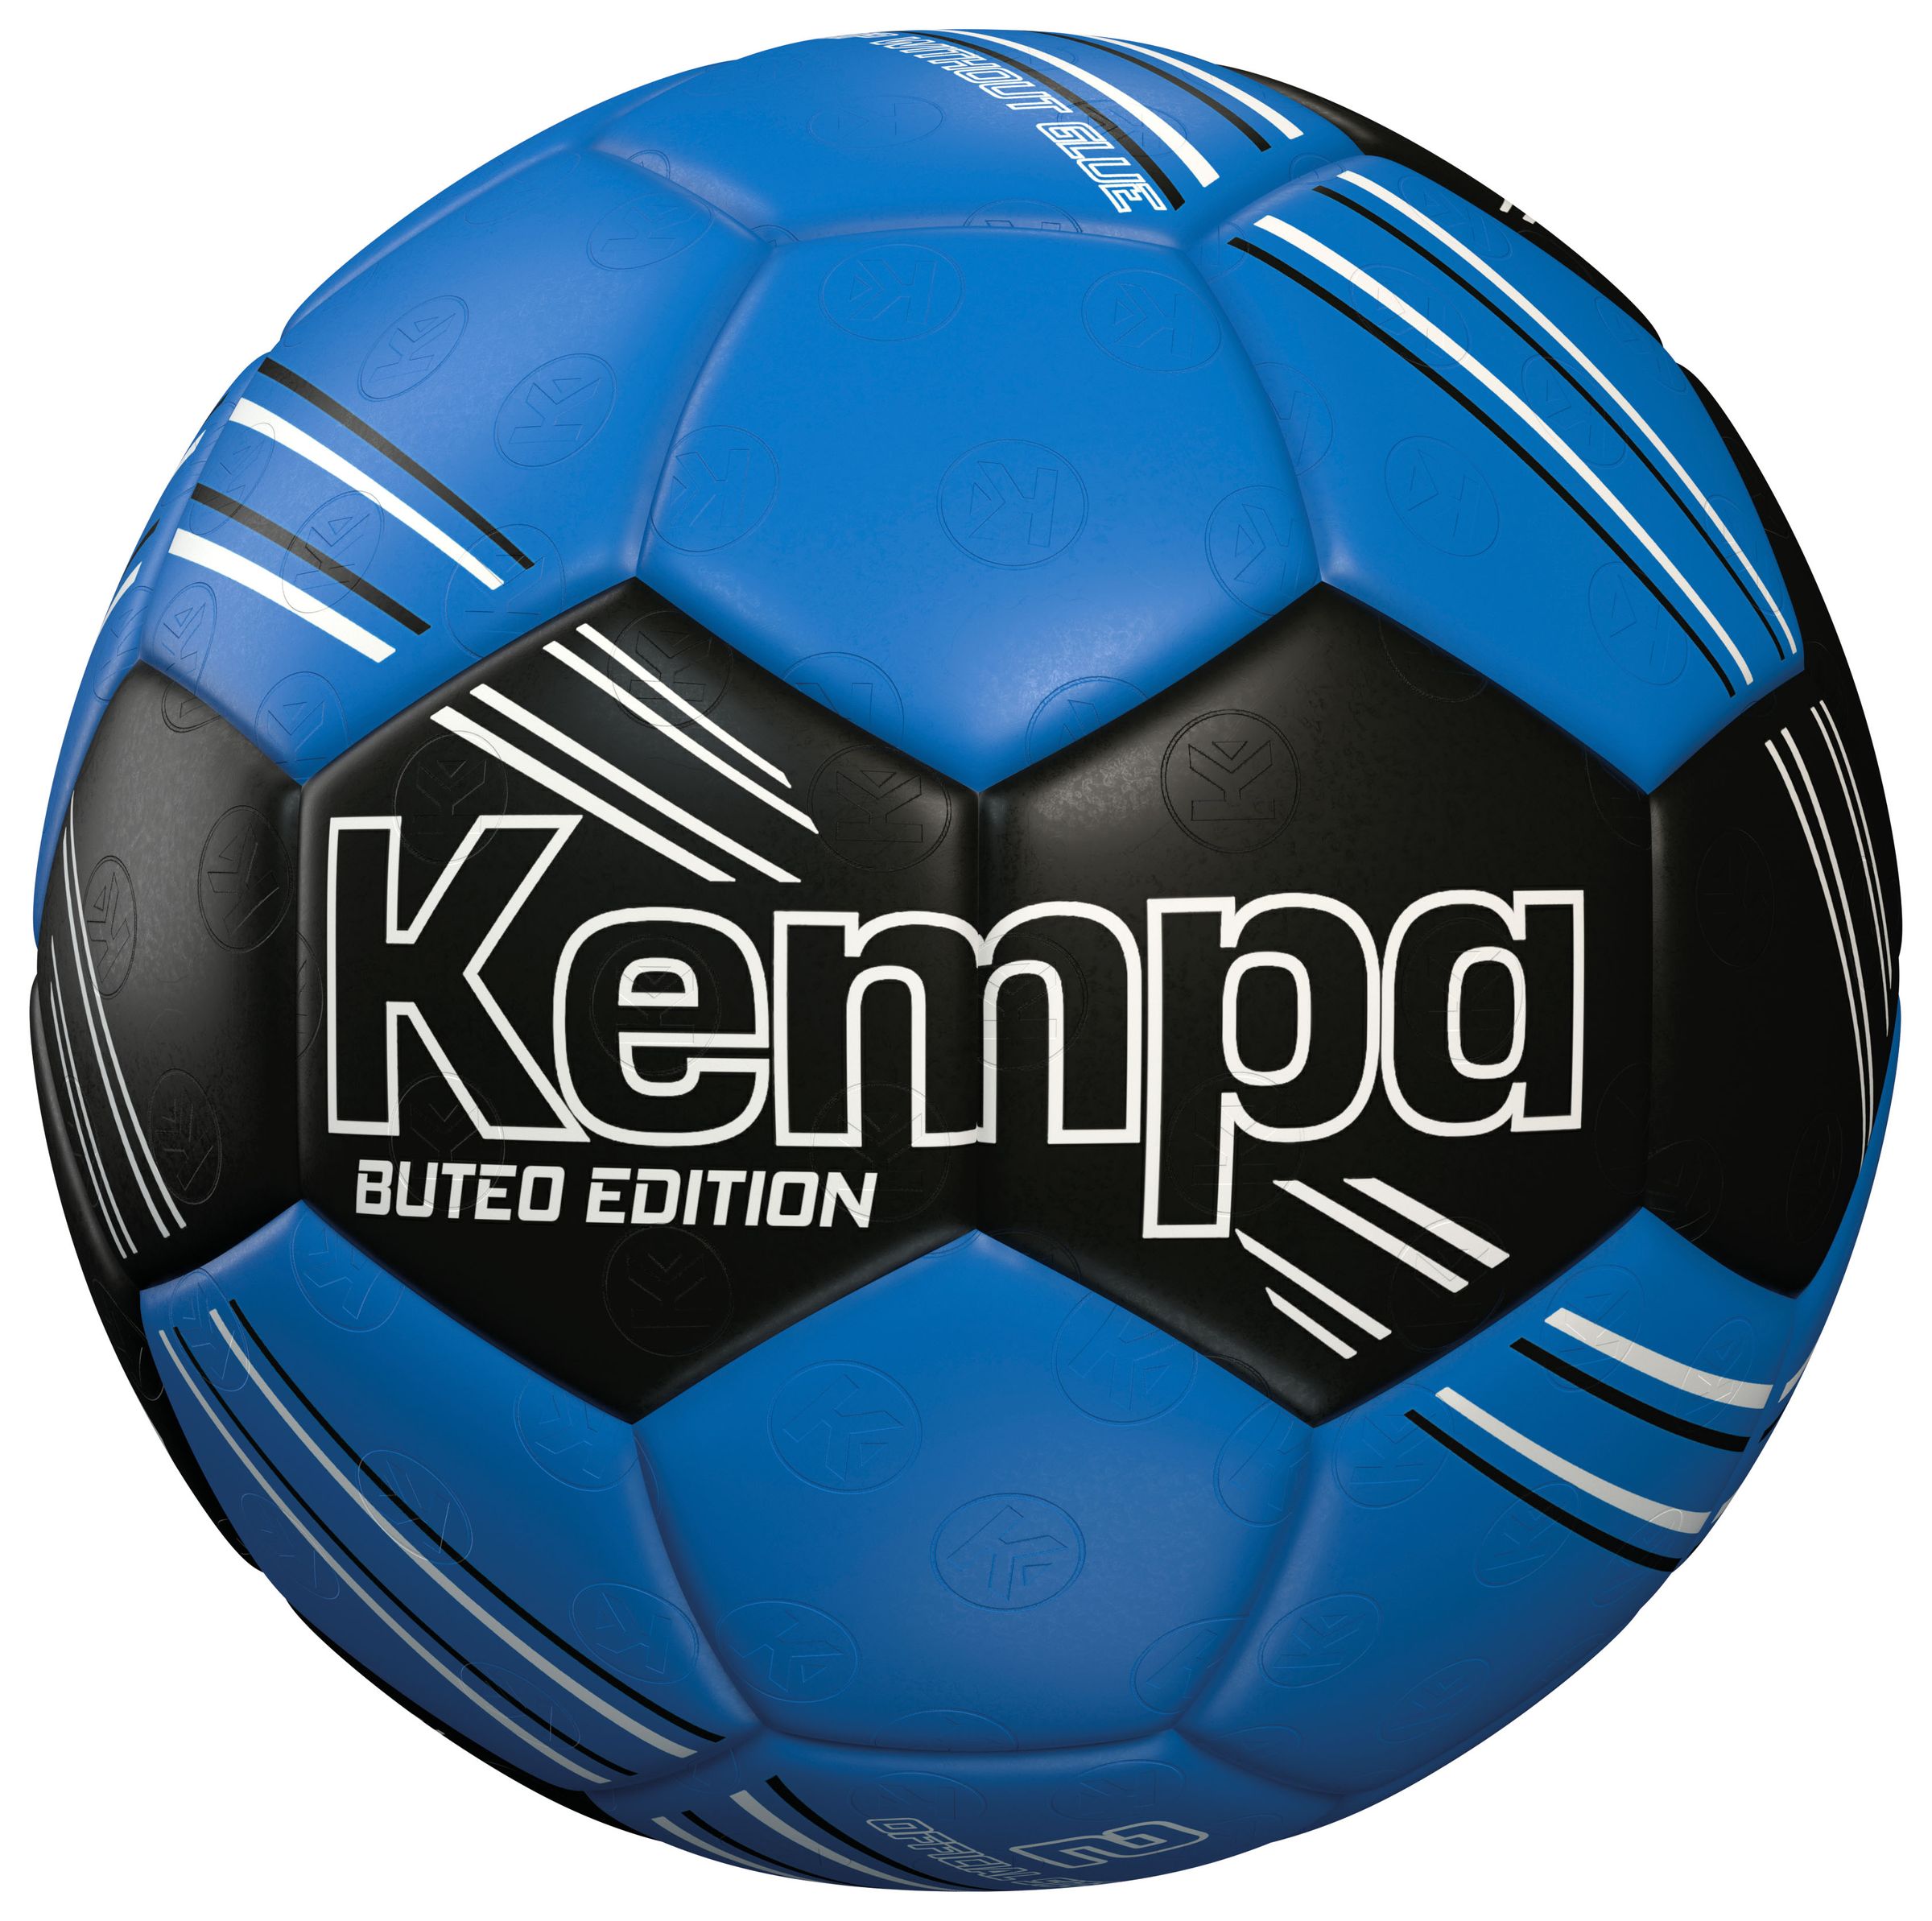 Kempa Handball BUTEO Edition Size 3 Spielball 200189801 Blau